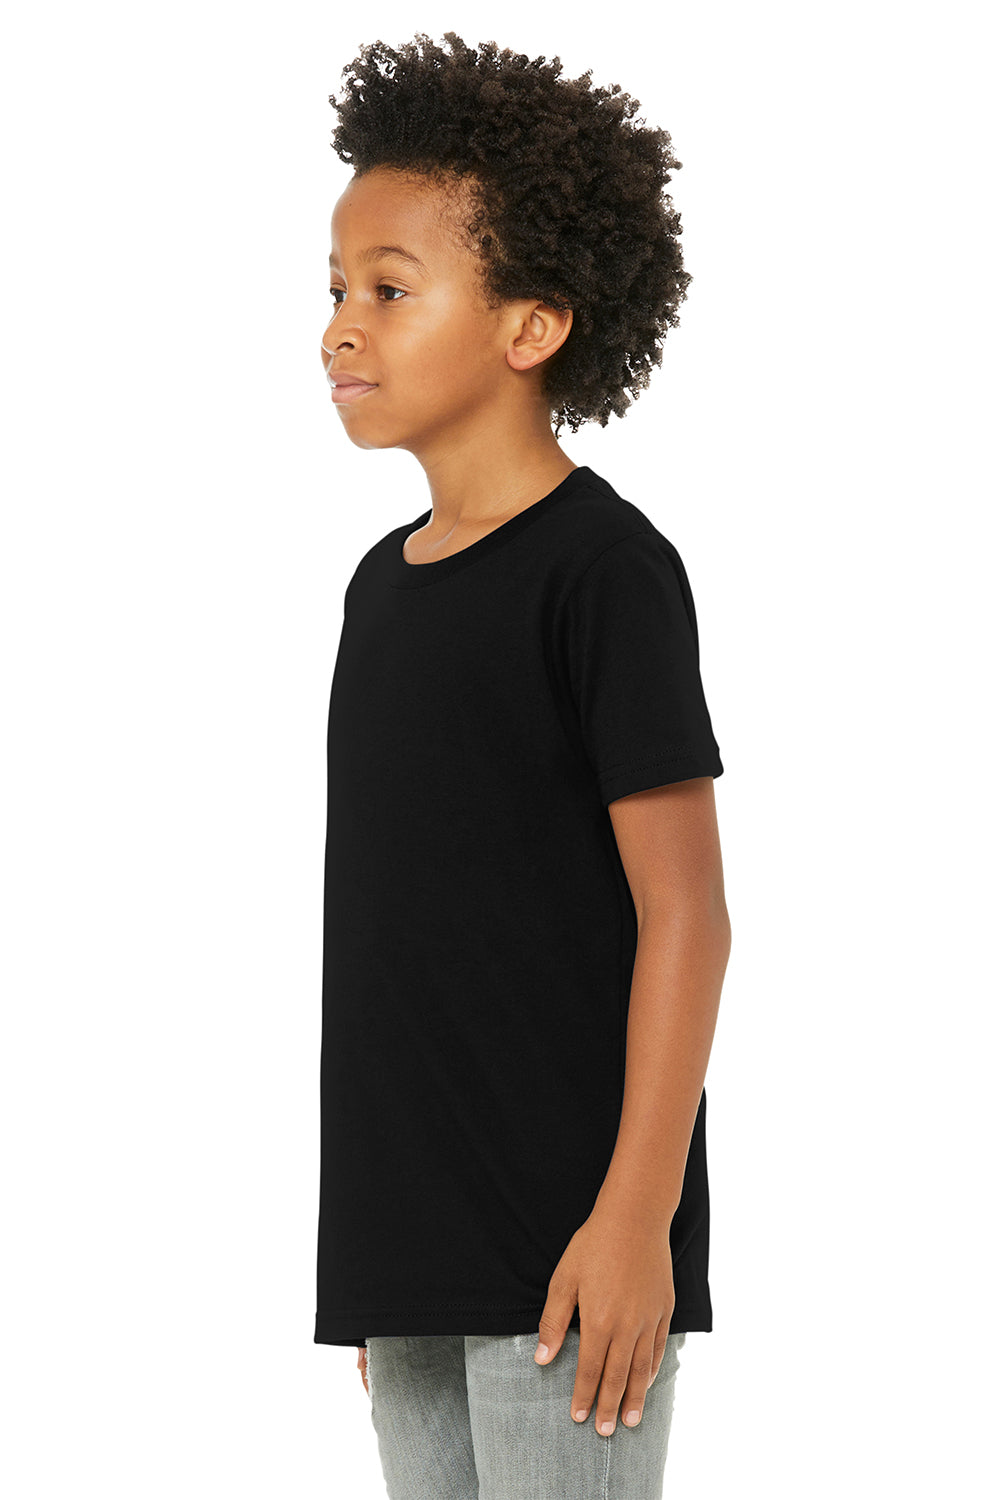 Bella + Canvas 3001Y Youth Jersey Short Sleeve Crewneck T-Shirt Black Model Side